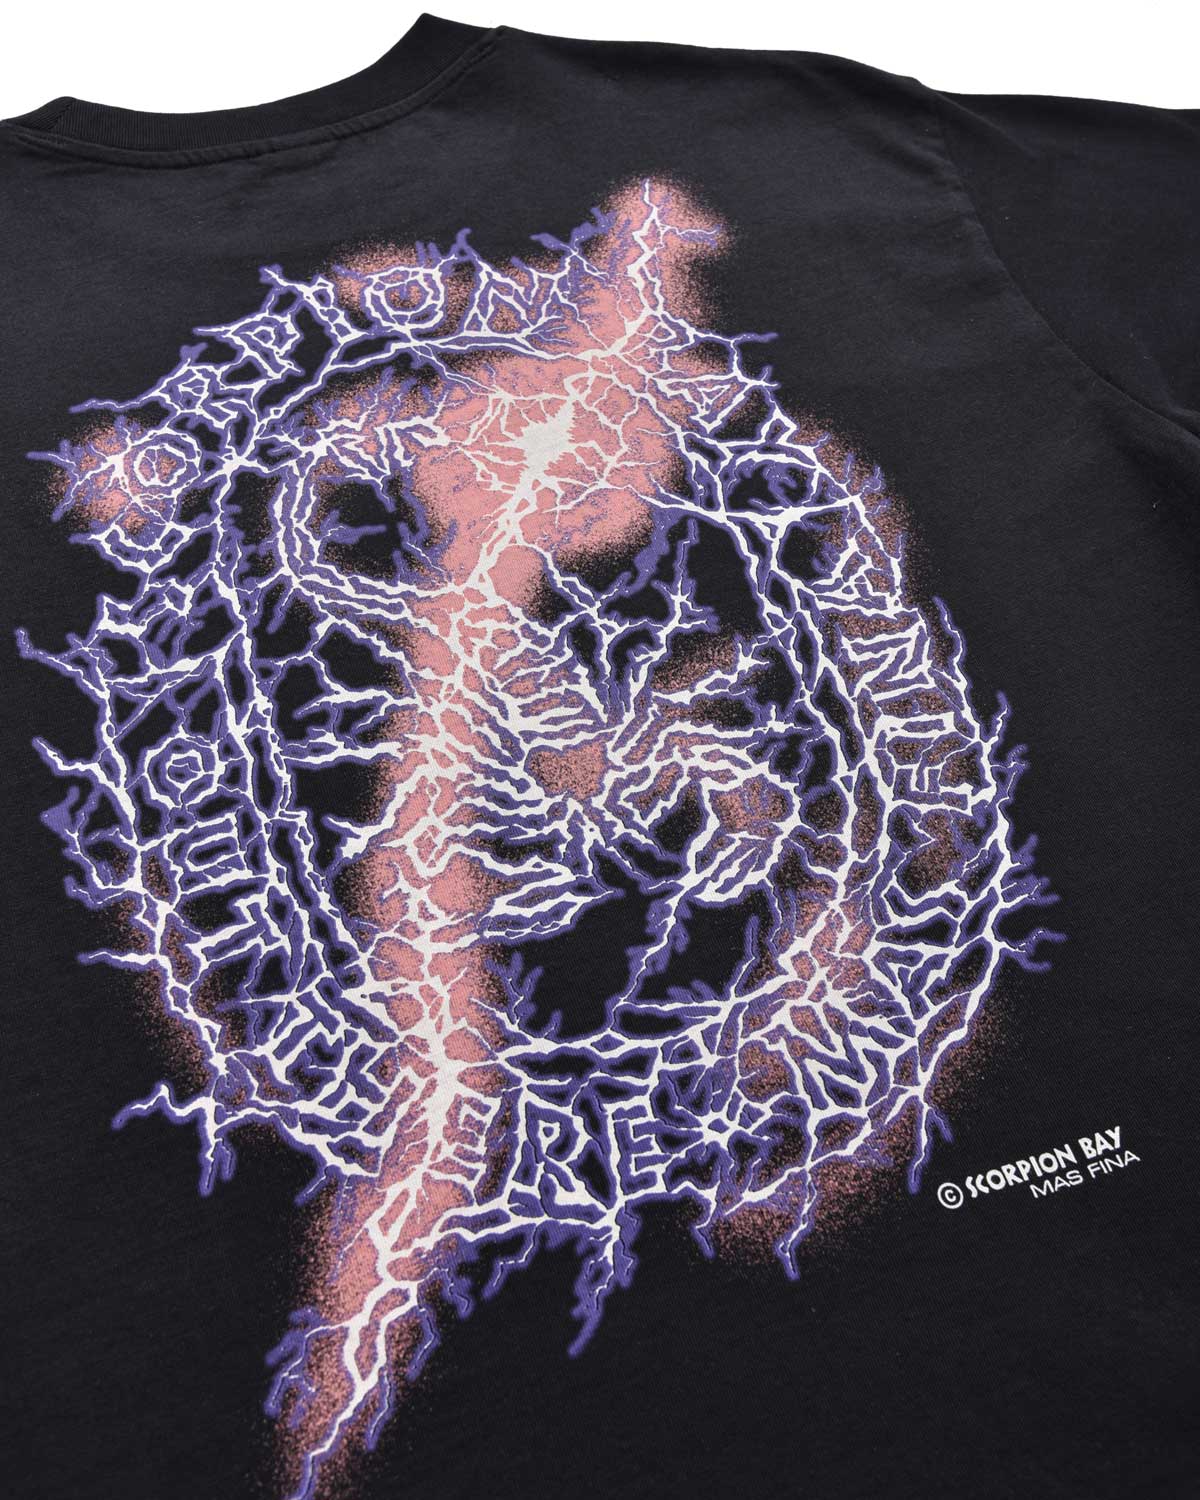 Man | Ritual Og "Thunder Bay" Black T-Shirt In 100% Cotton